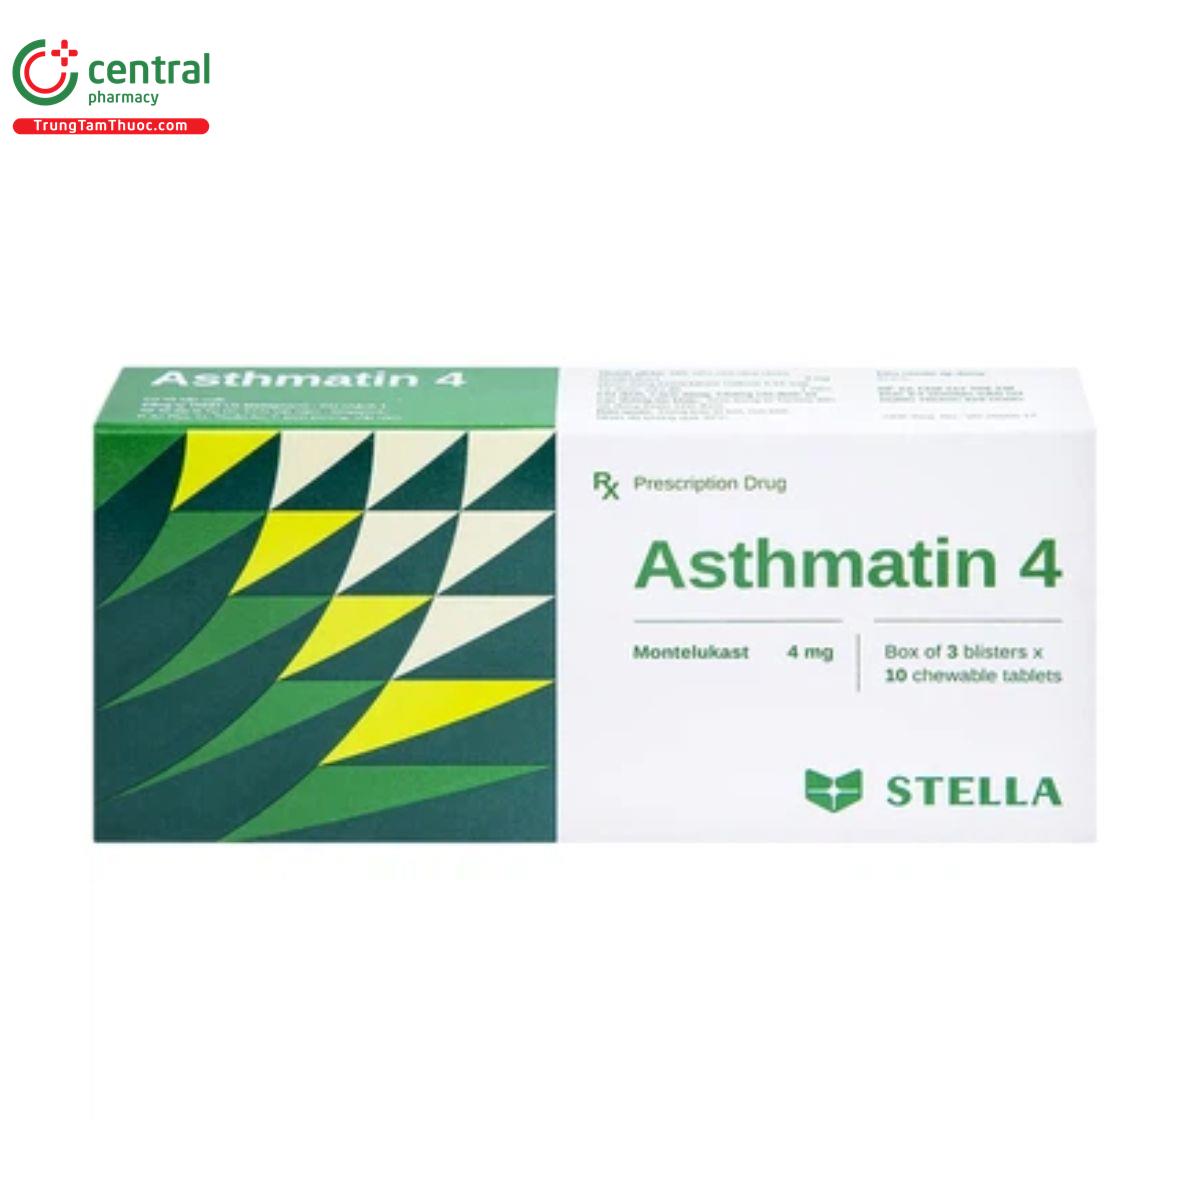 thuoc asthmatin 4 2 E1575